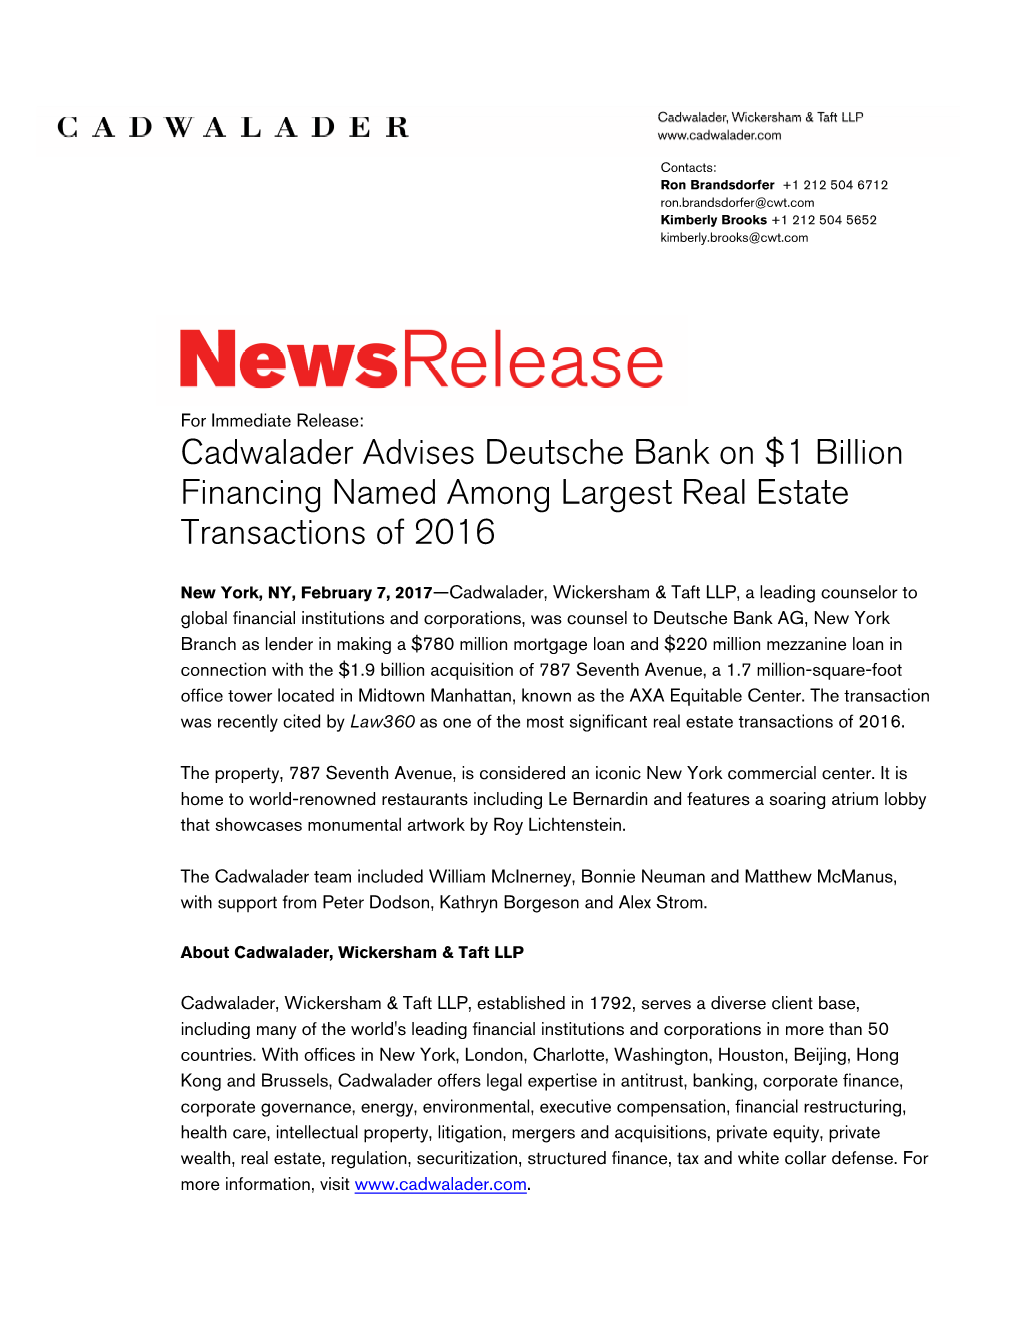 Cadwalader Advises Deutsche Bank on $1 Billion Financing Named Among Largest Real Estate Transactions of 2016